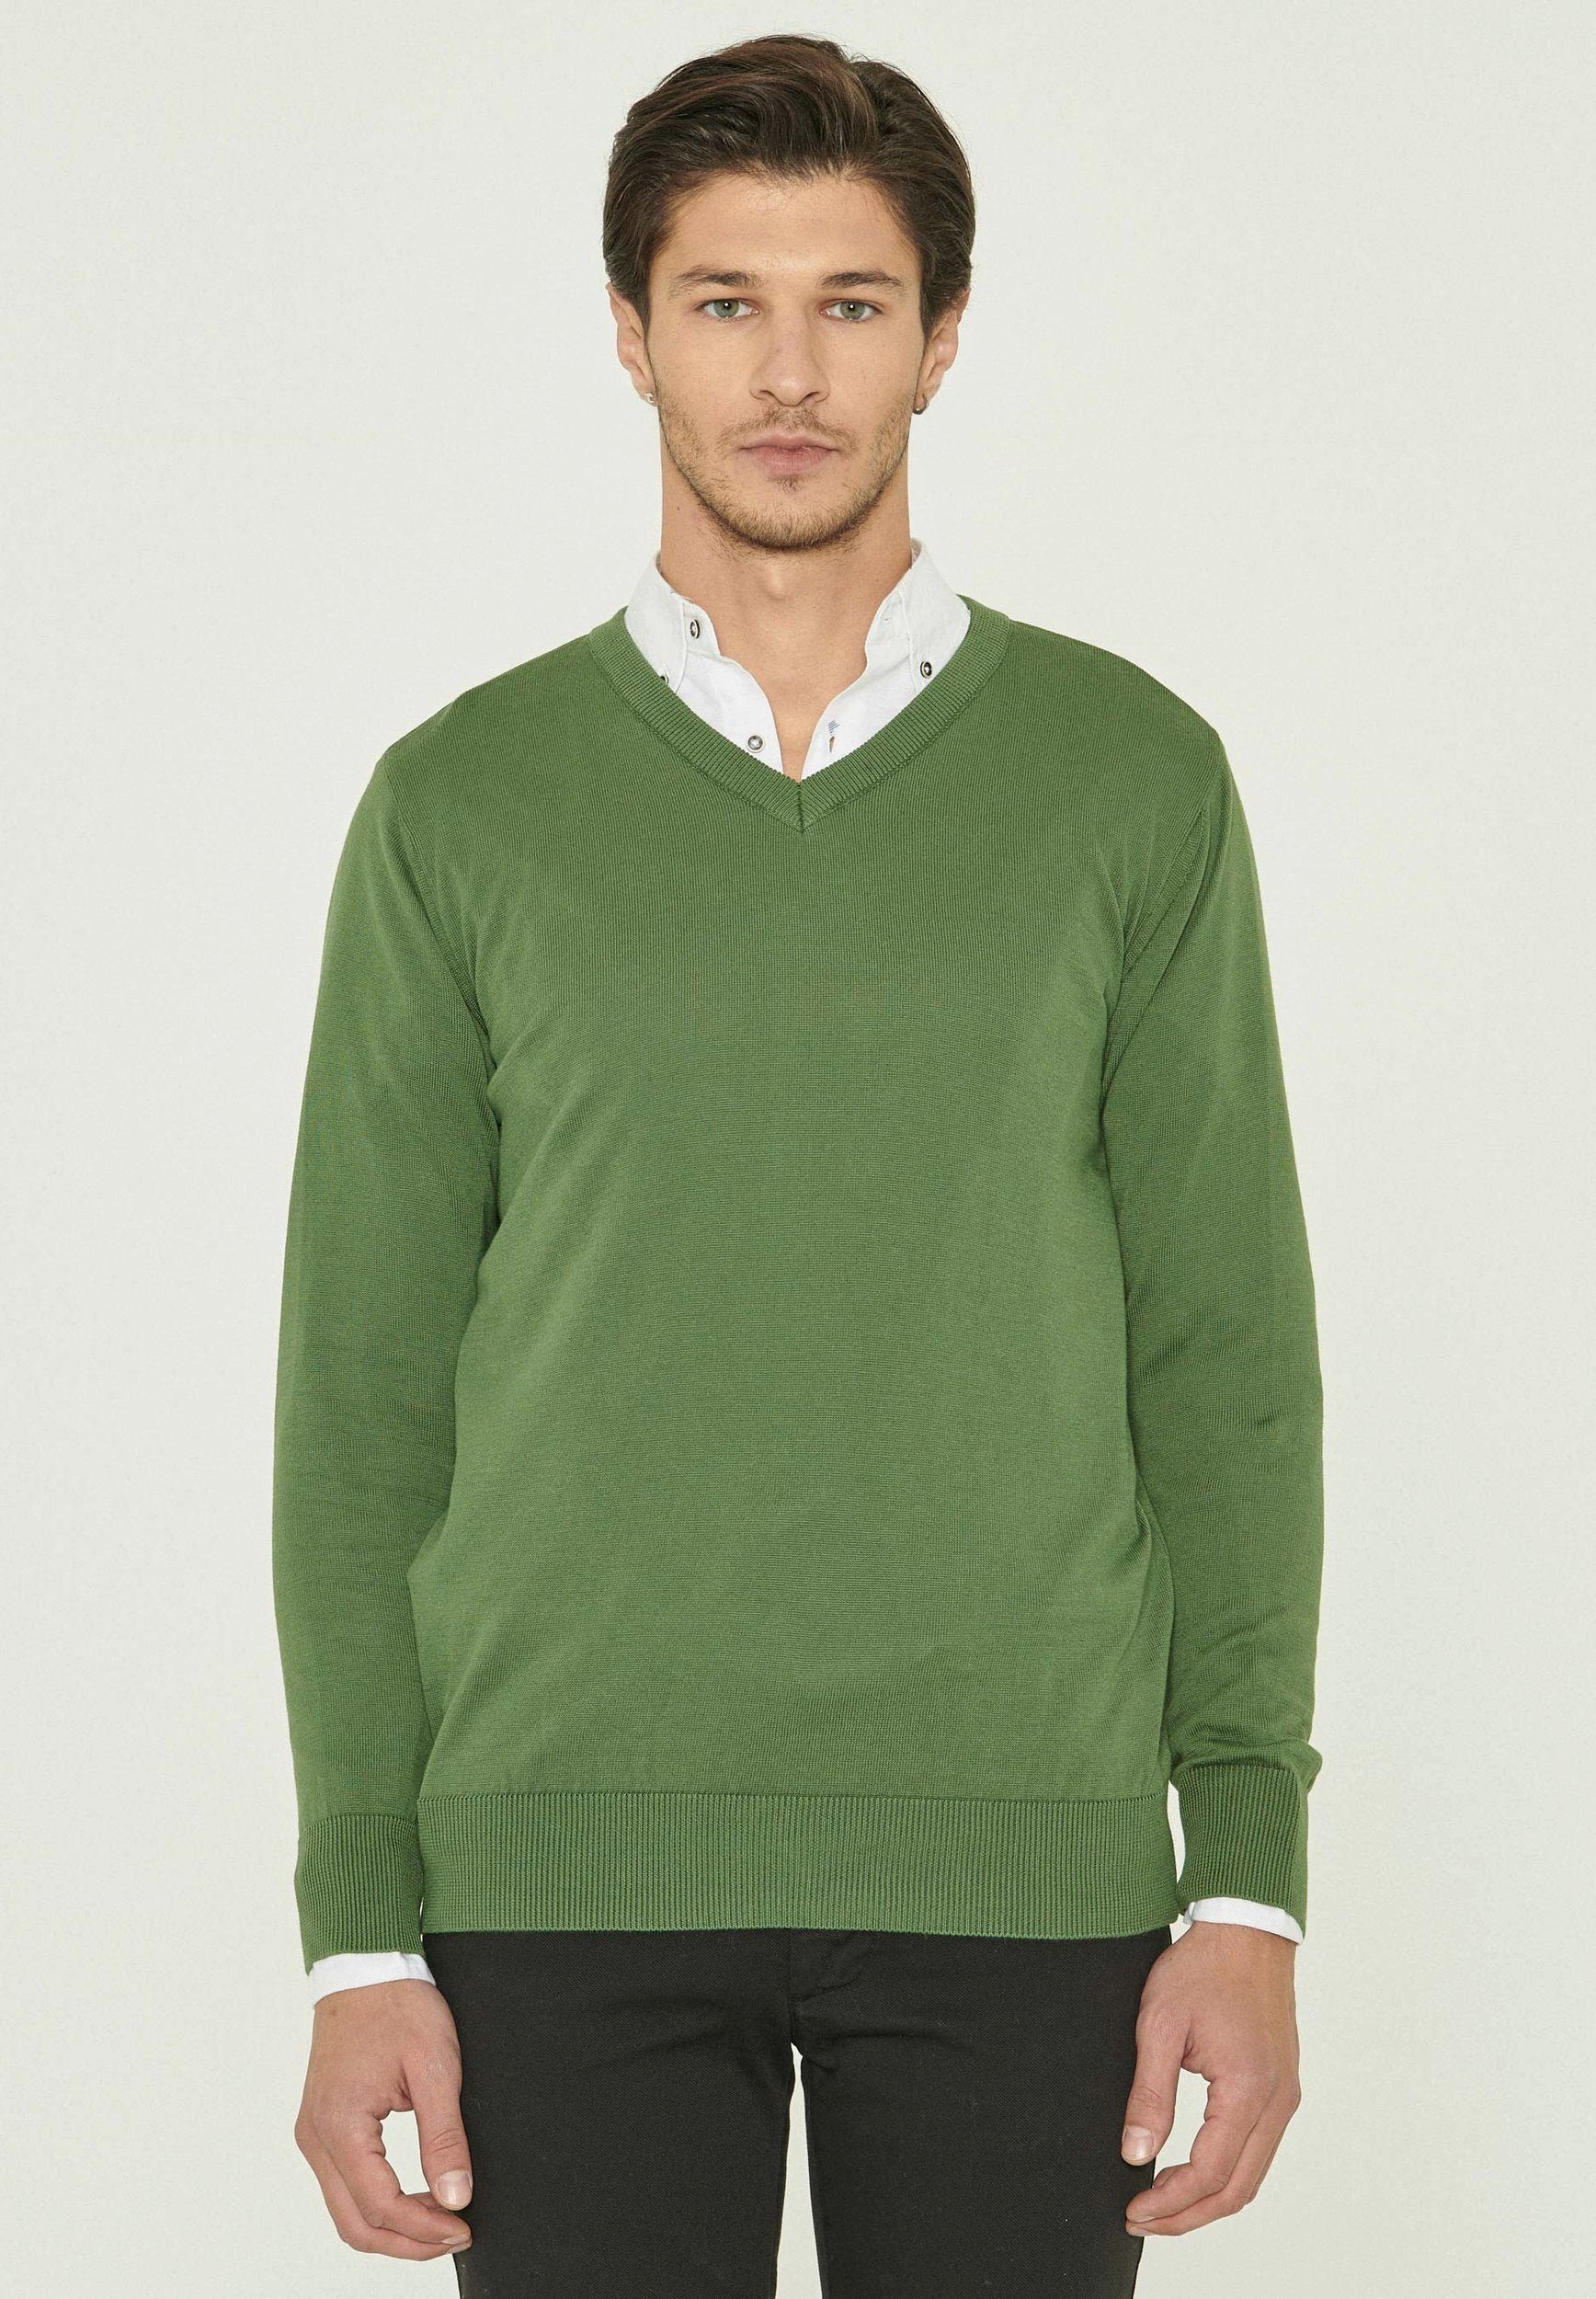 ORGANICATION Sweater Men's V-Neck Sweater in Green